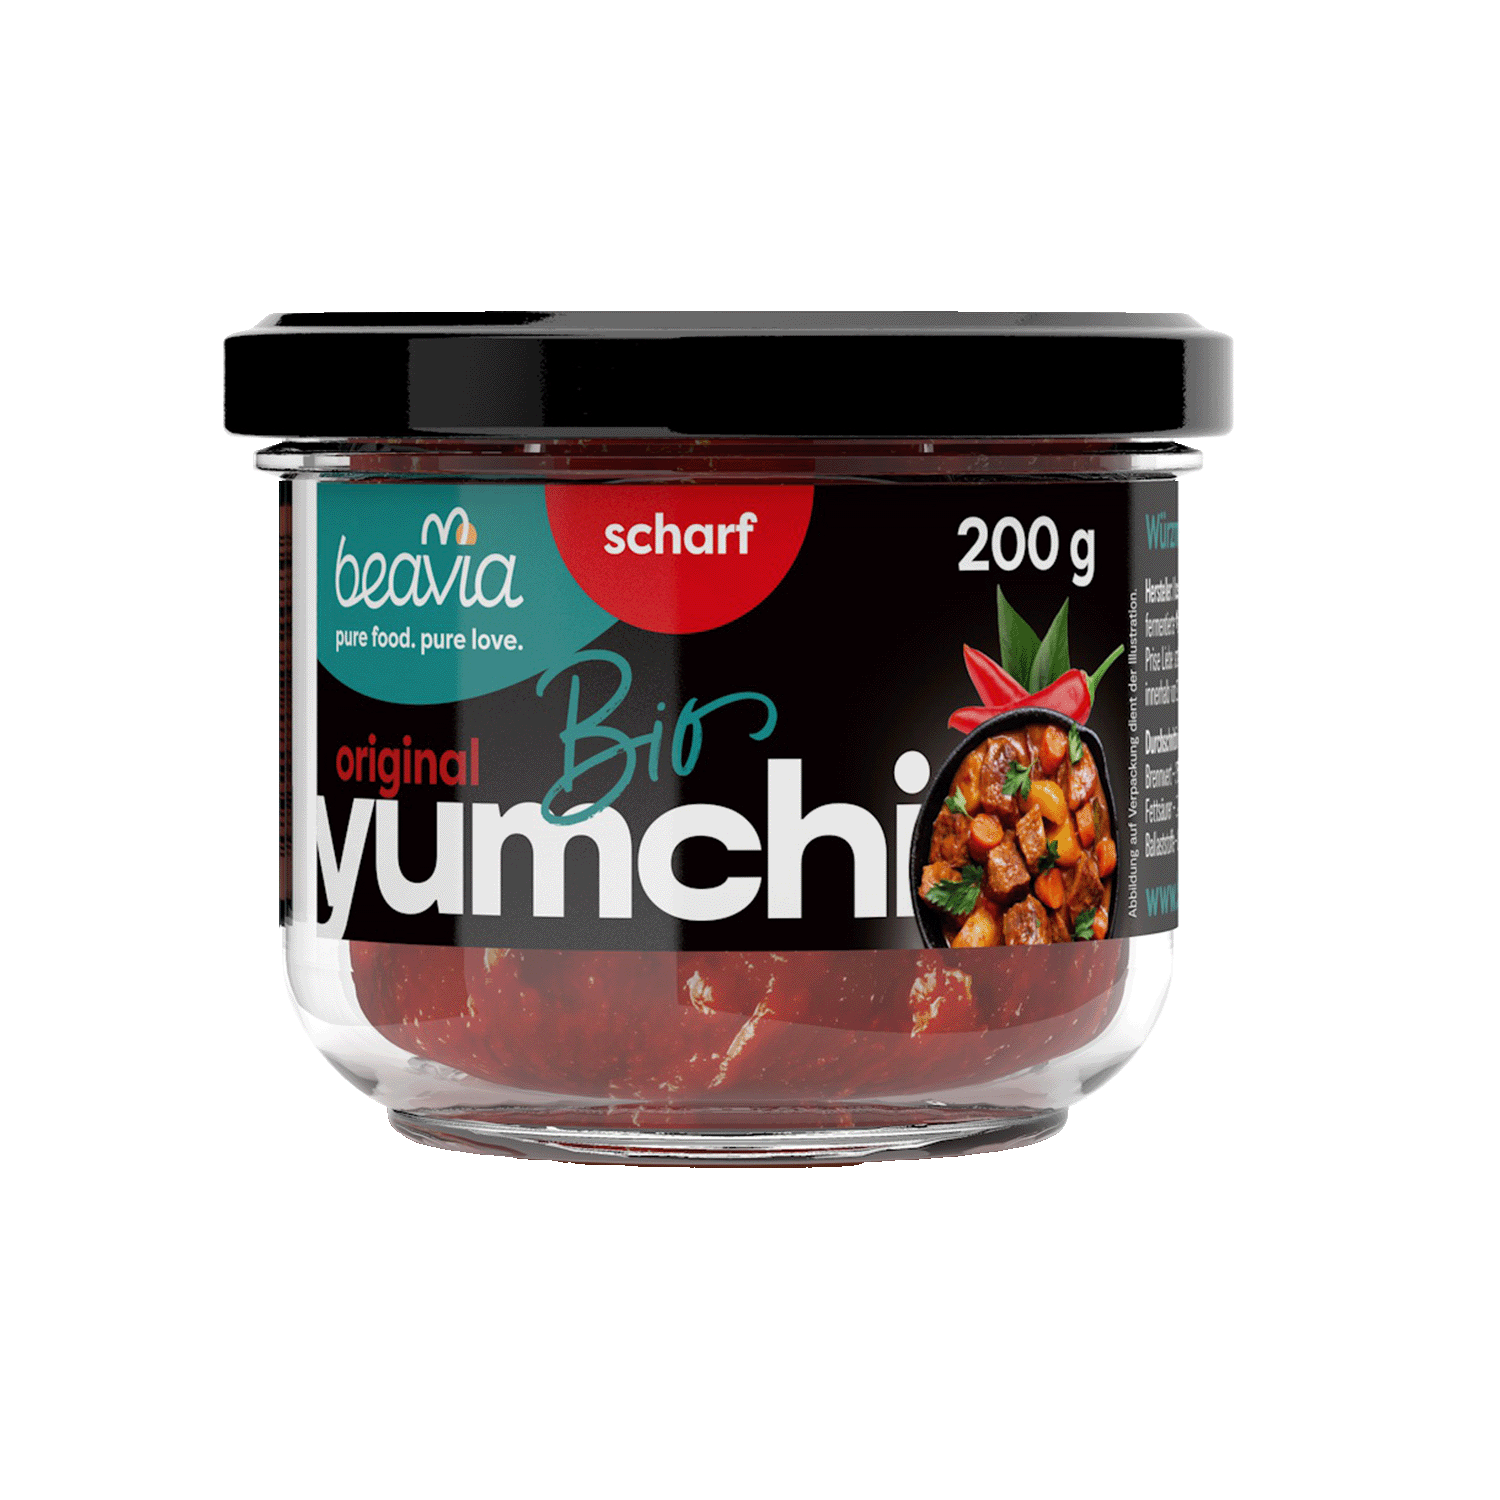 Sauce Yumchi scharf, BIO, 200g